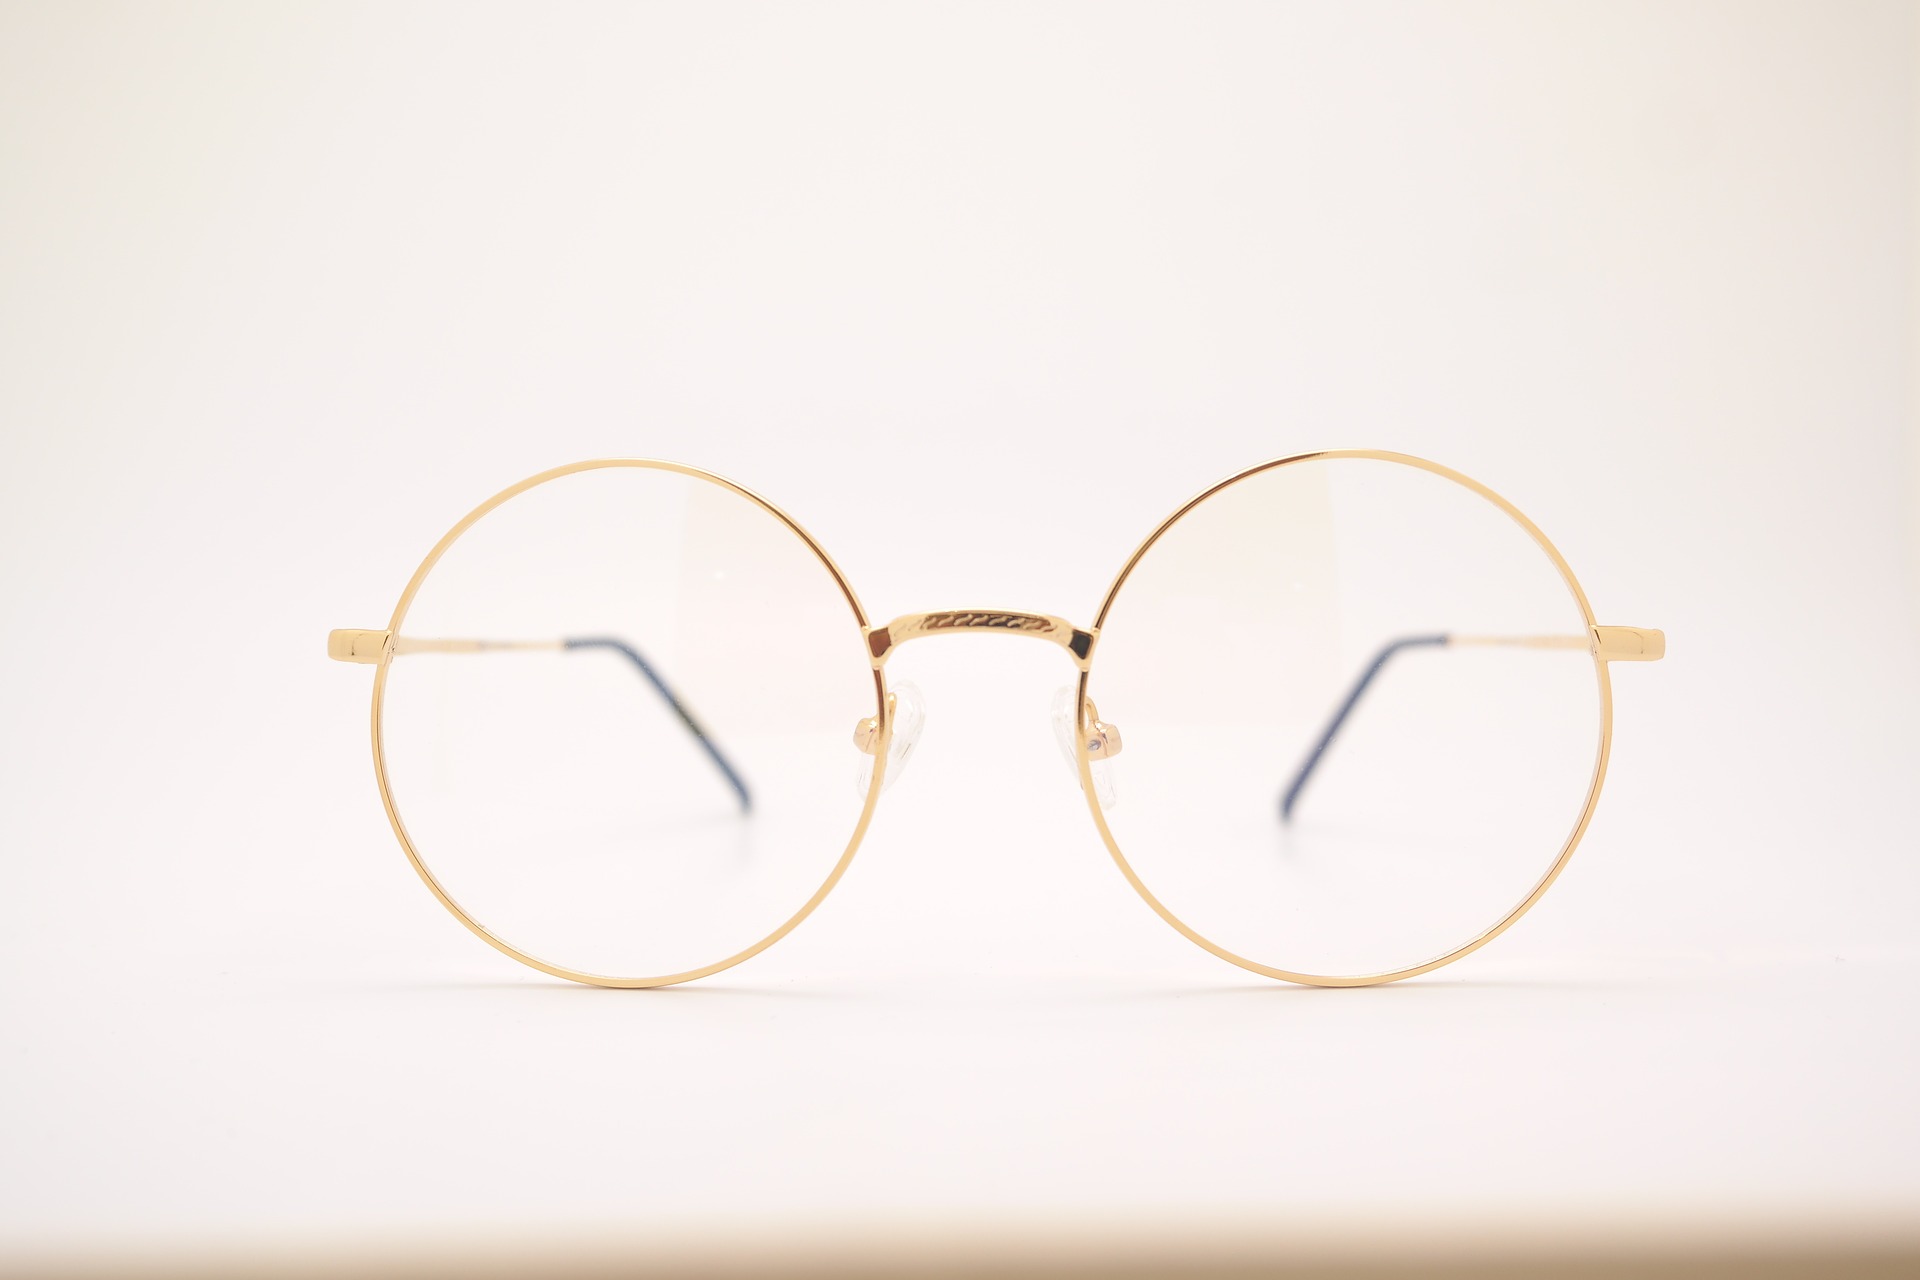 Kakve naočale su pogodne za kratkovidnost, a kakve za dalekovidnost?